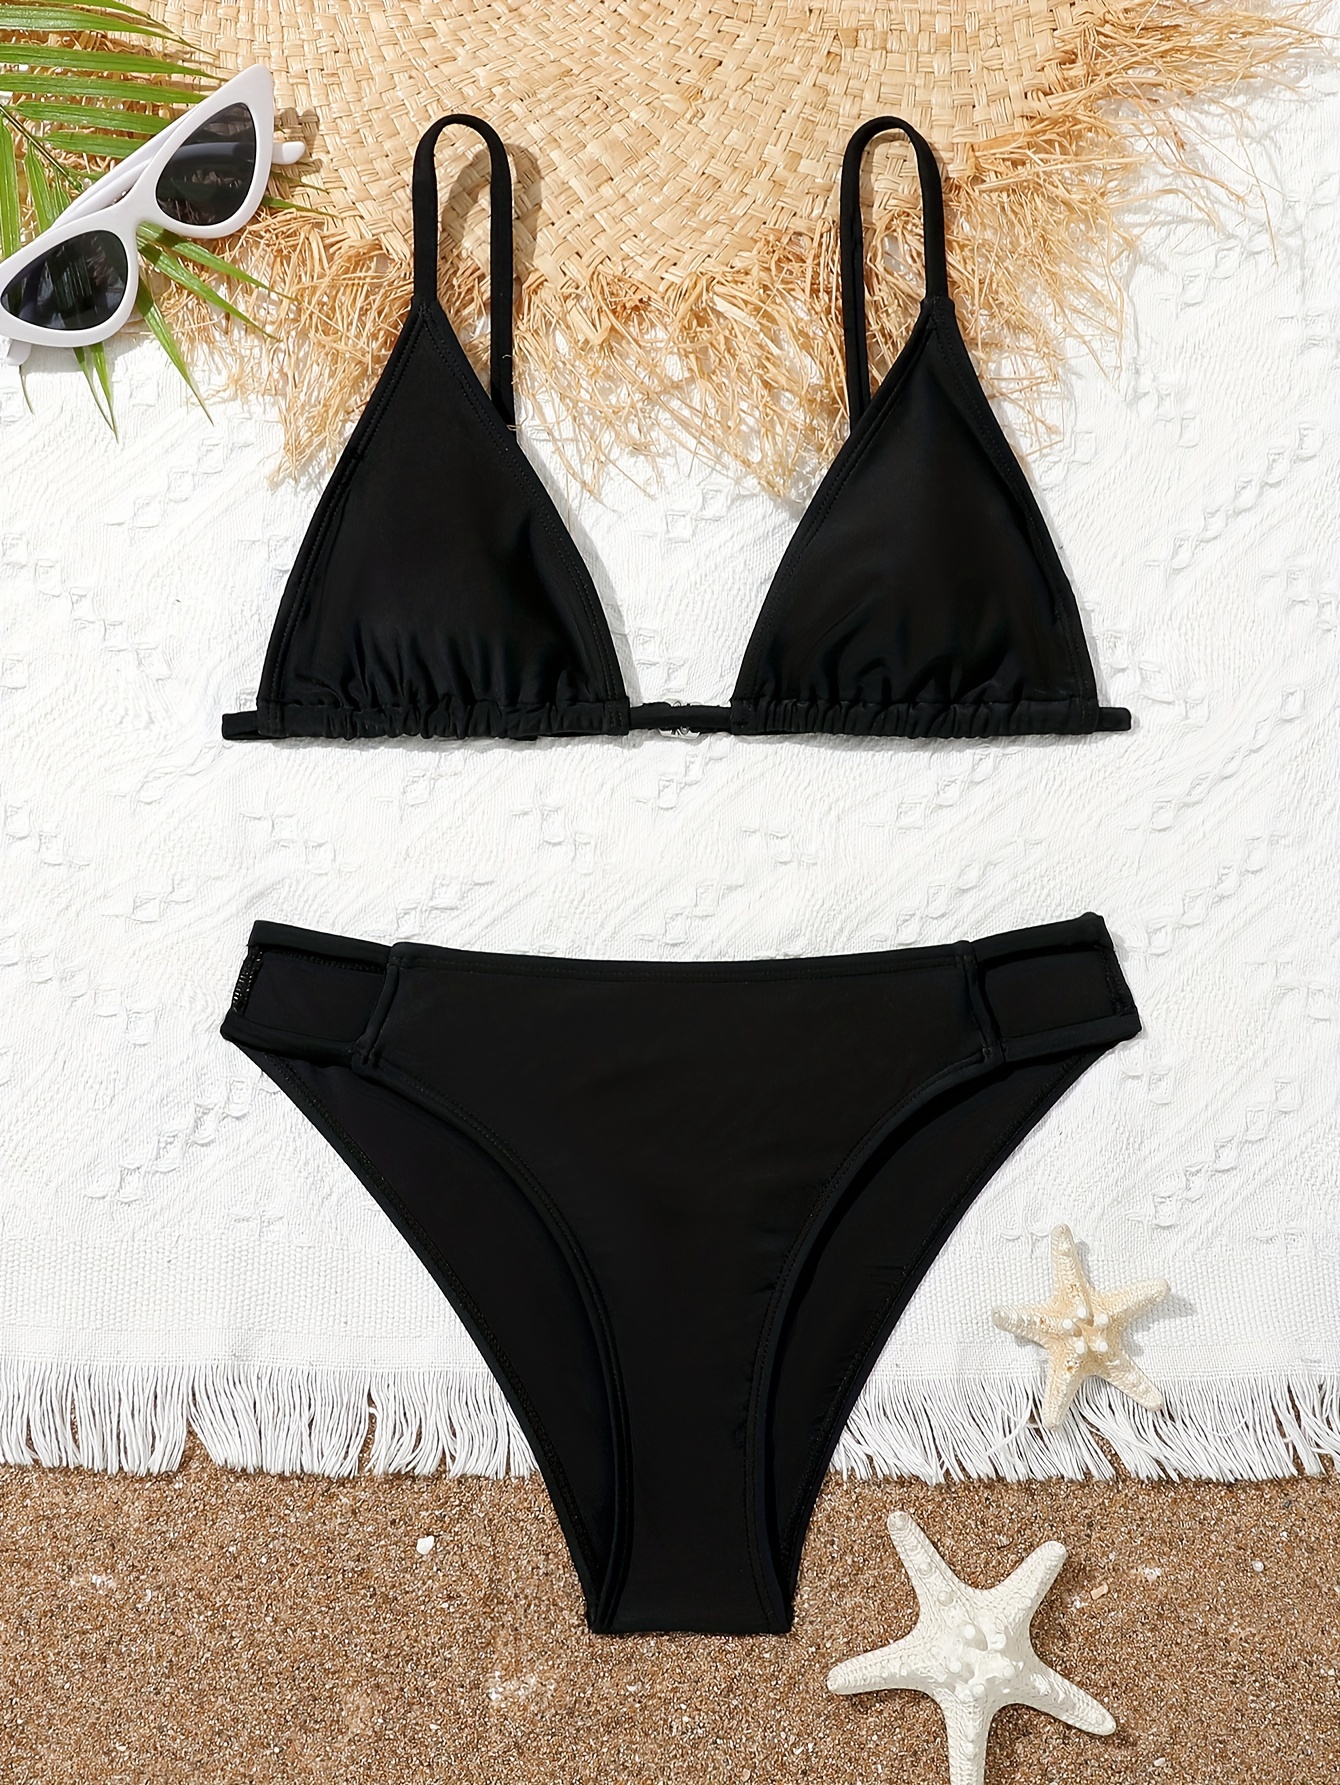 Teen Girls Tie Dye Bikini Set, Cut-out Waist Suspender Bikini Top & Bottom  Set For Vacation Beach Swimwear